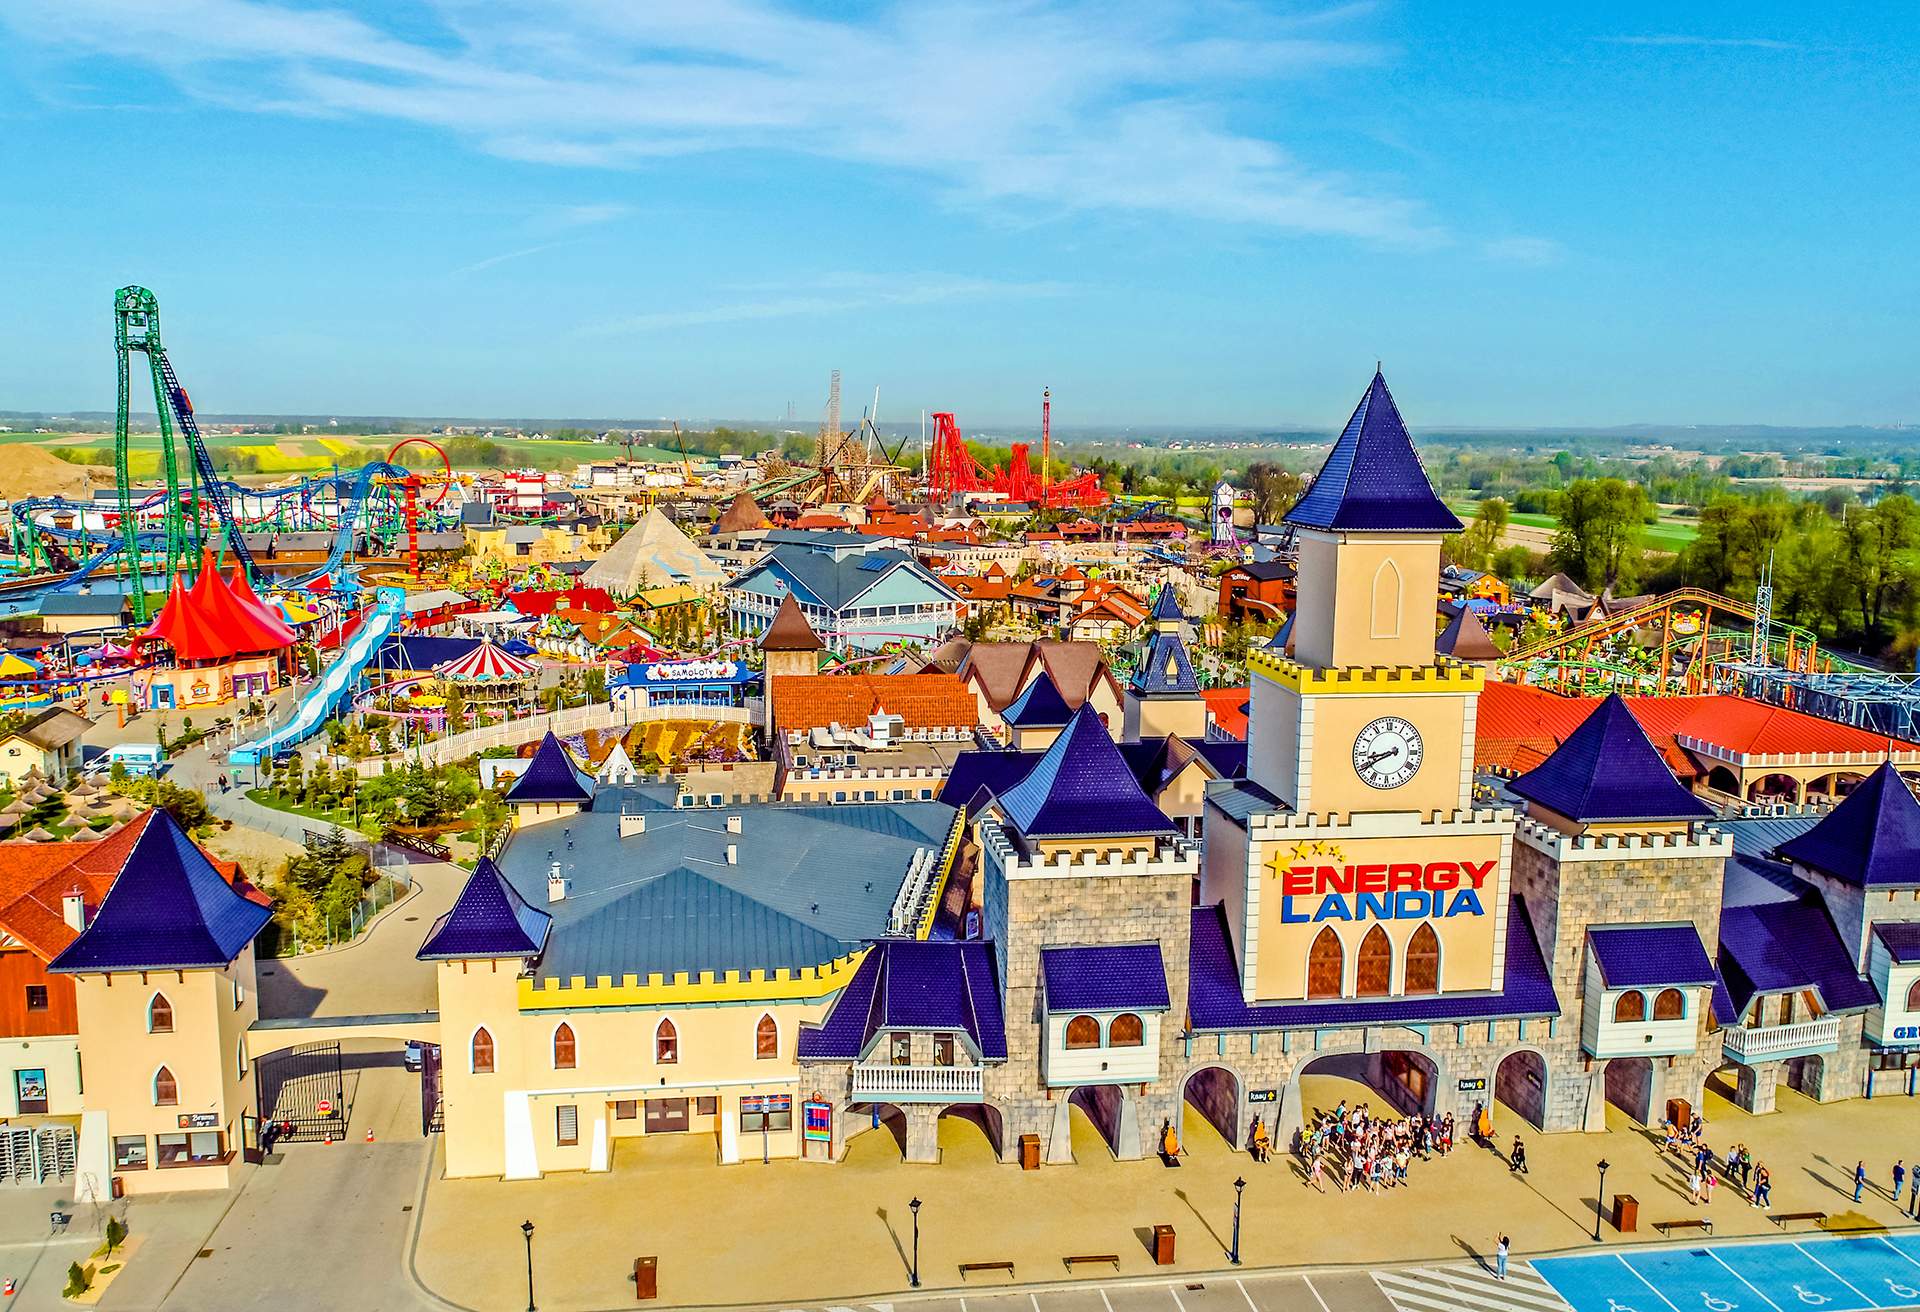 Aerial view of Energylandia amusement park in Poland